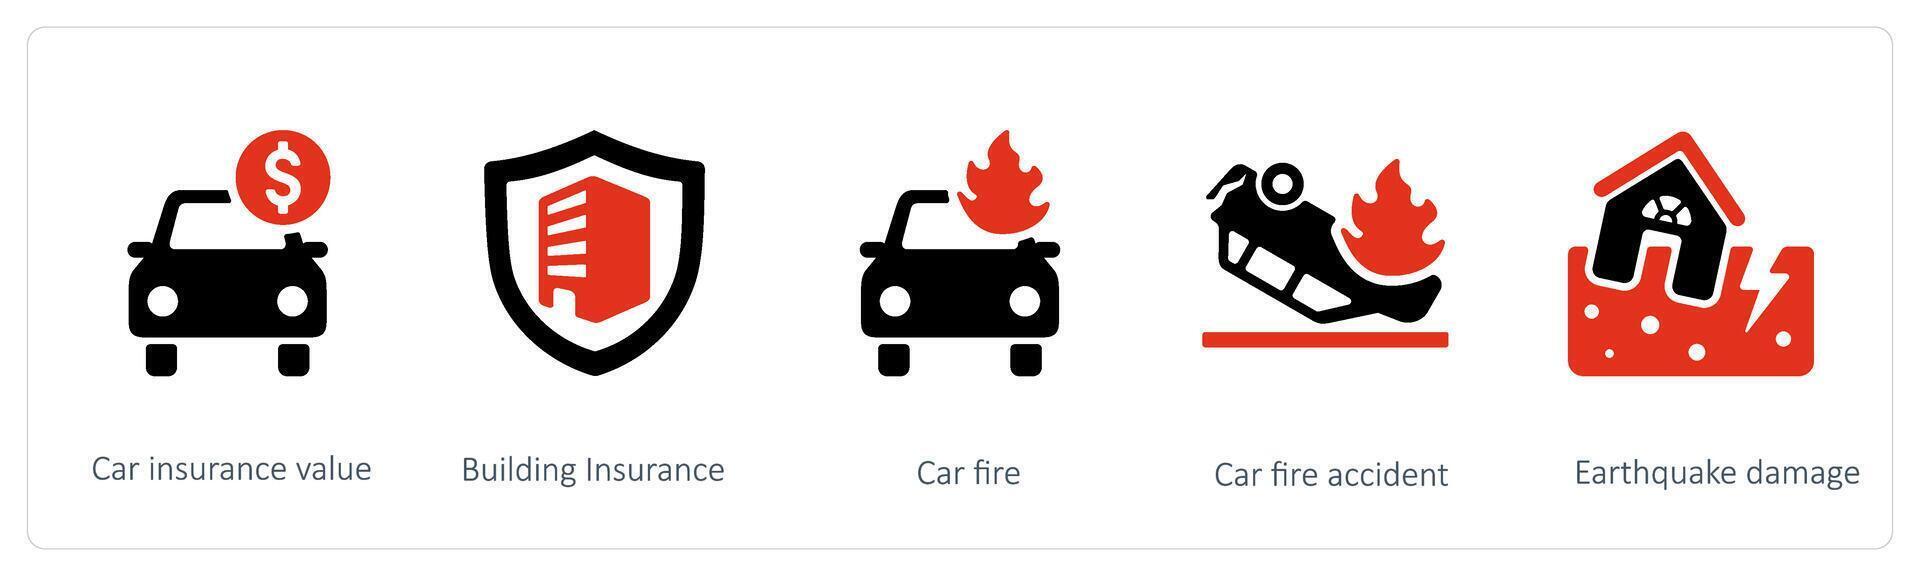 Car insurance value and car fire vector